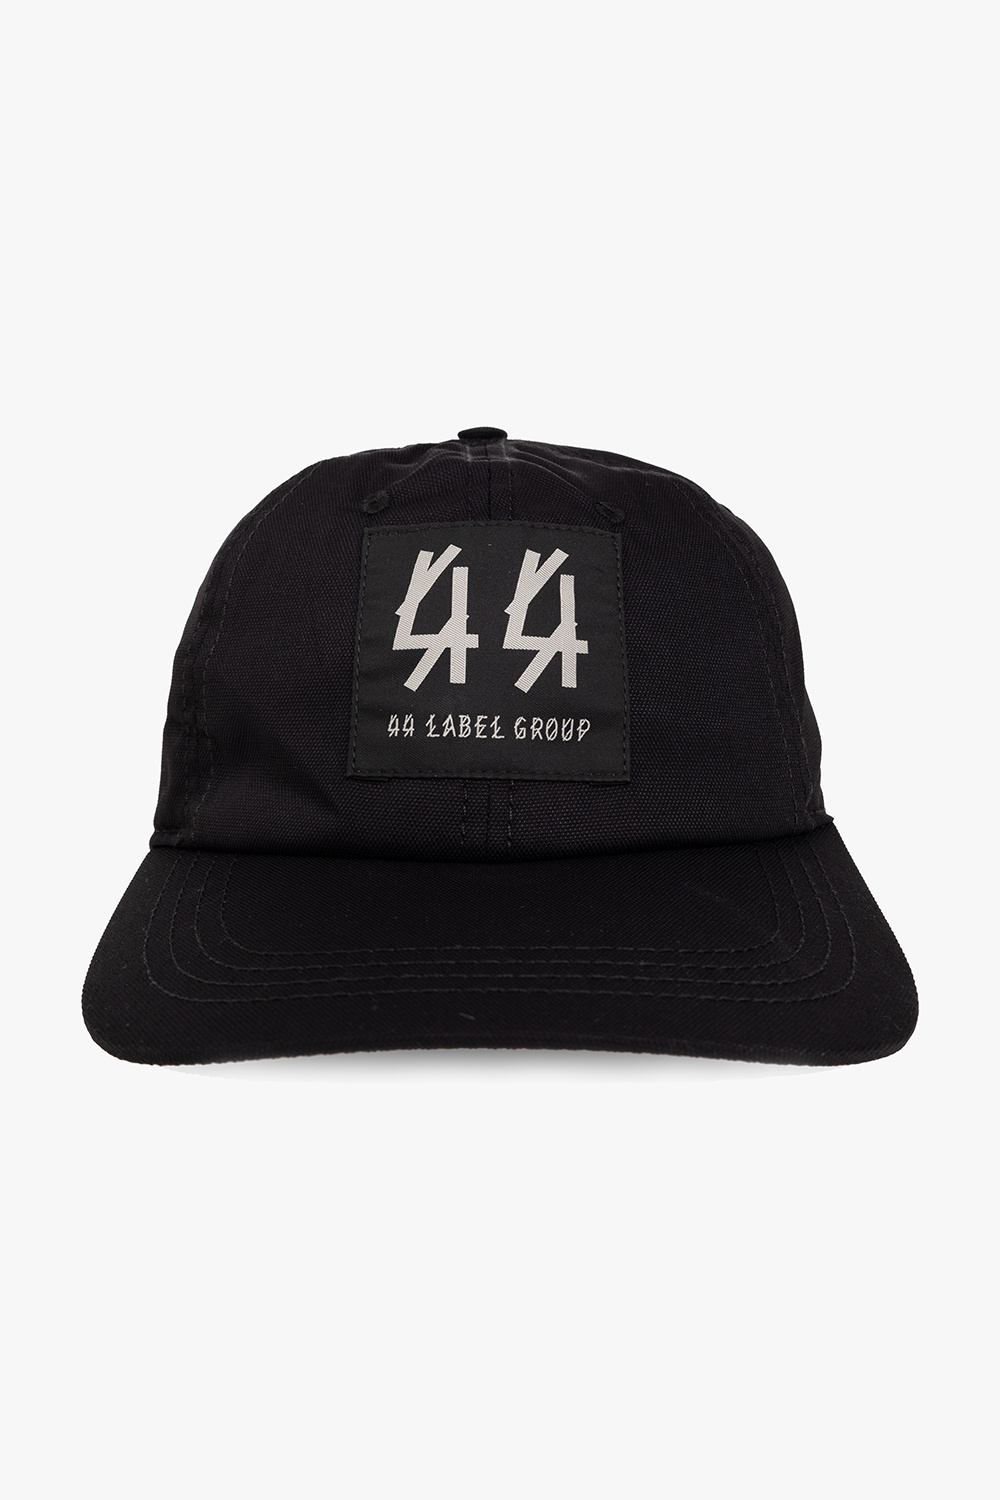 44 Label Group Baseball cap